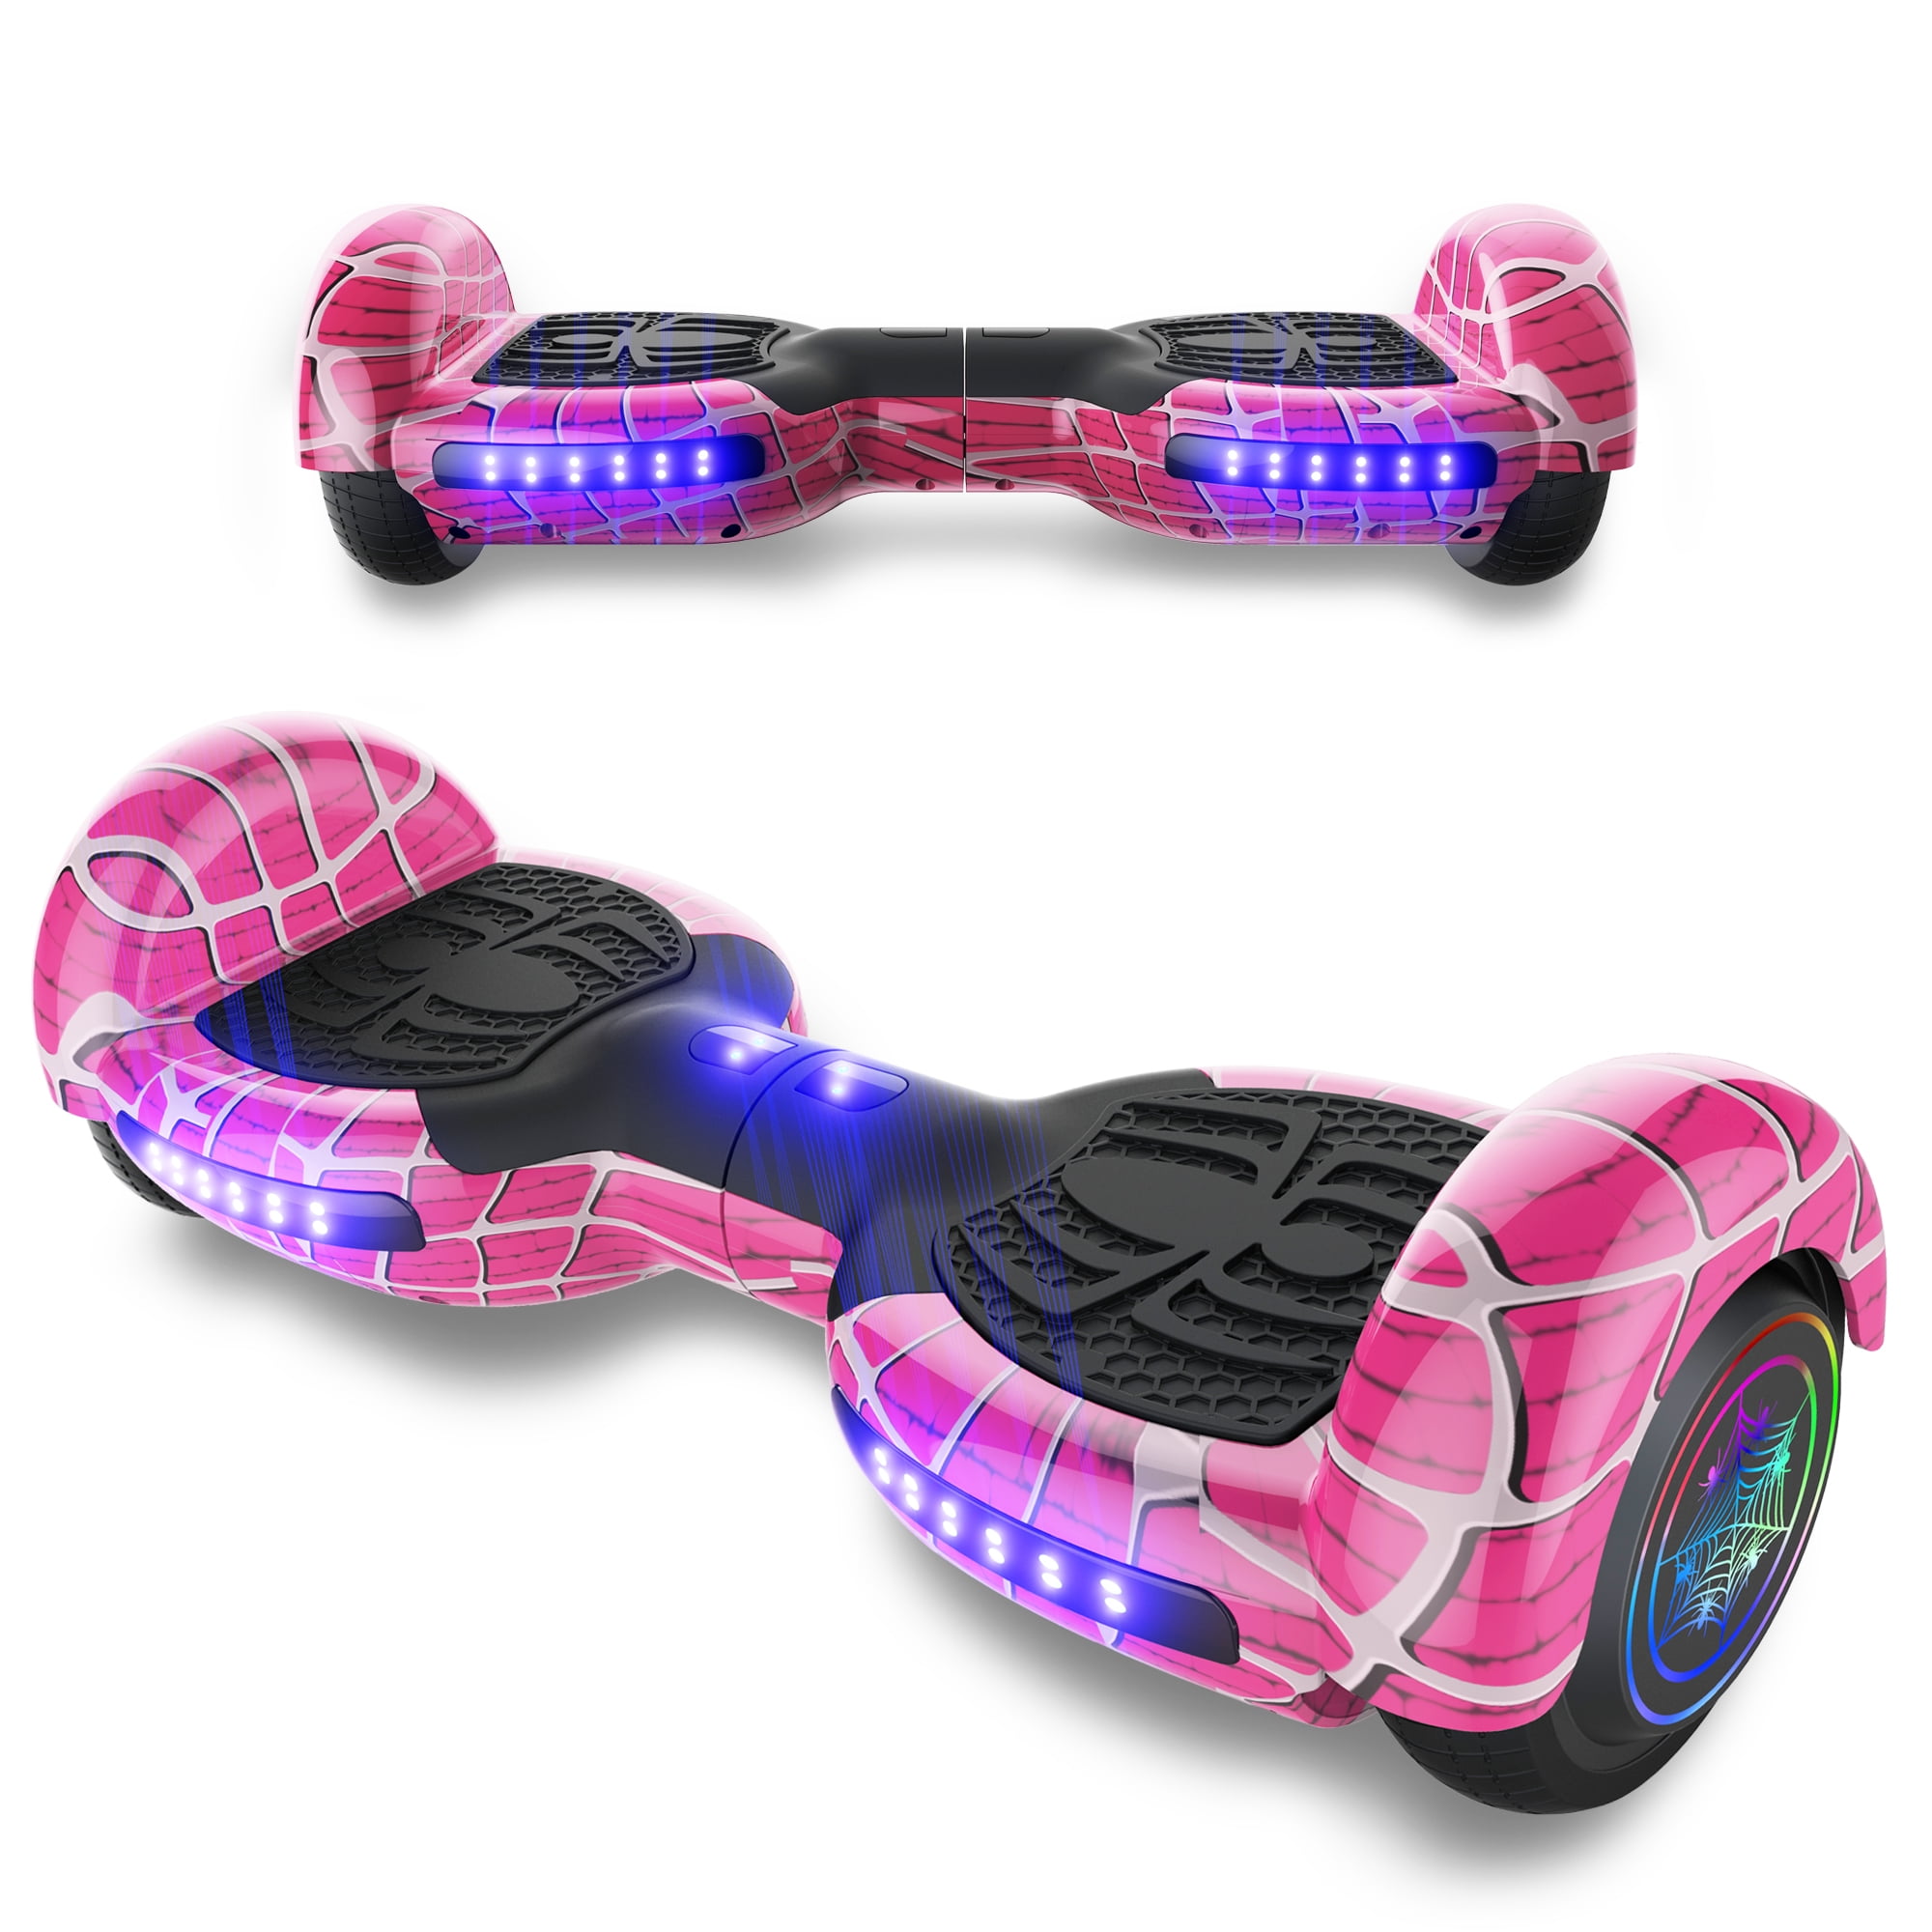 Hoverboard for Kids Adult Spider Self Balancing Hoverboard with LED Lights Wheels Bluetooth Speaker UL 2272 Certified Hover Board 